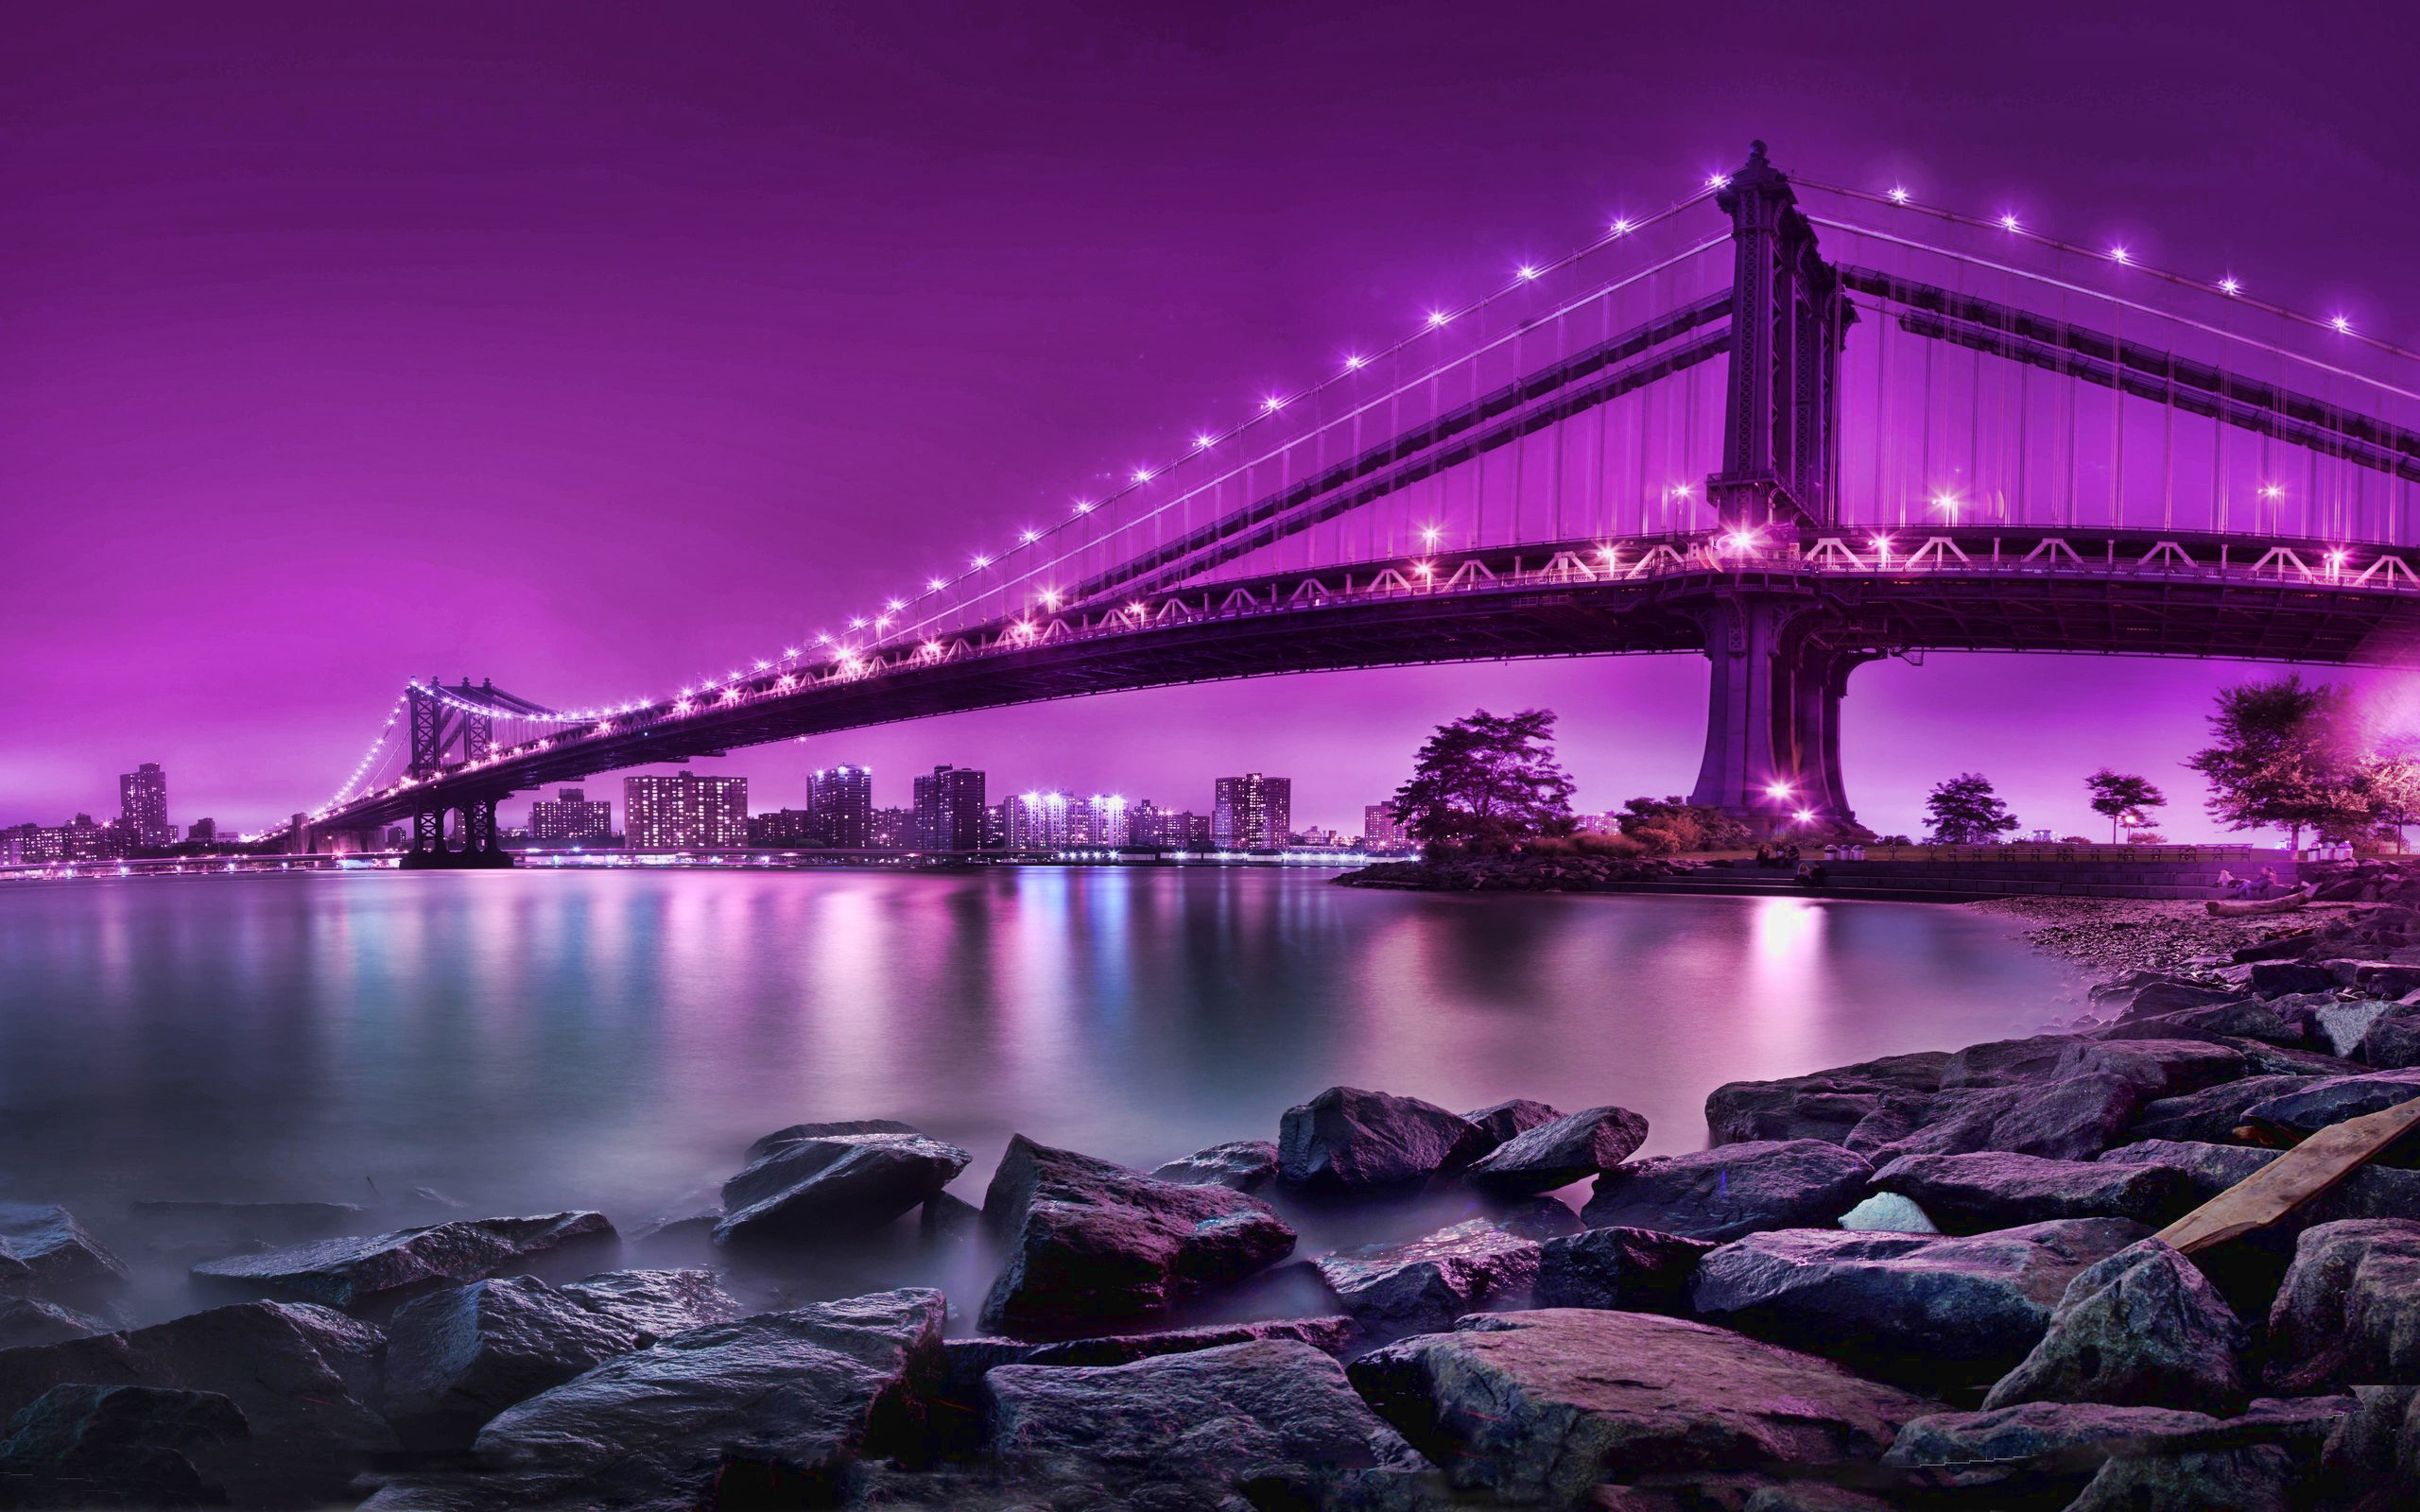 Free photo A large suspension bridge during purple twilight